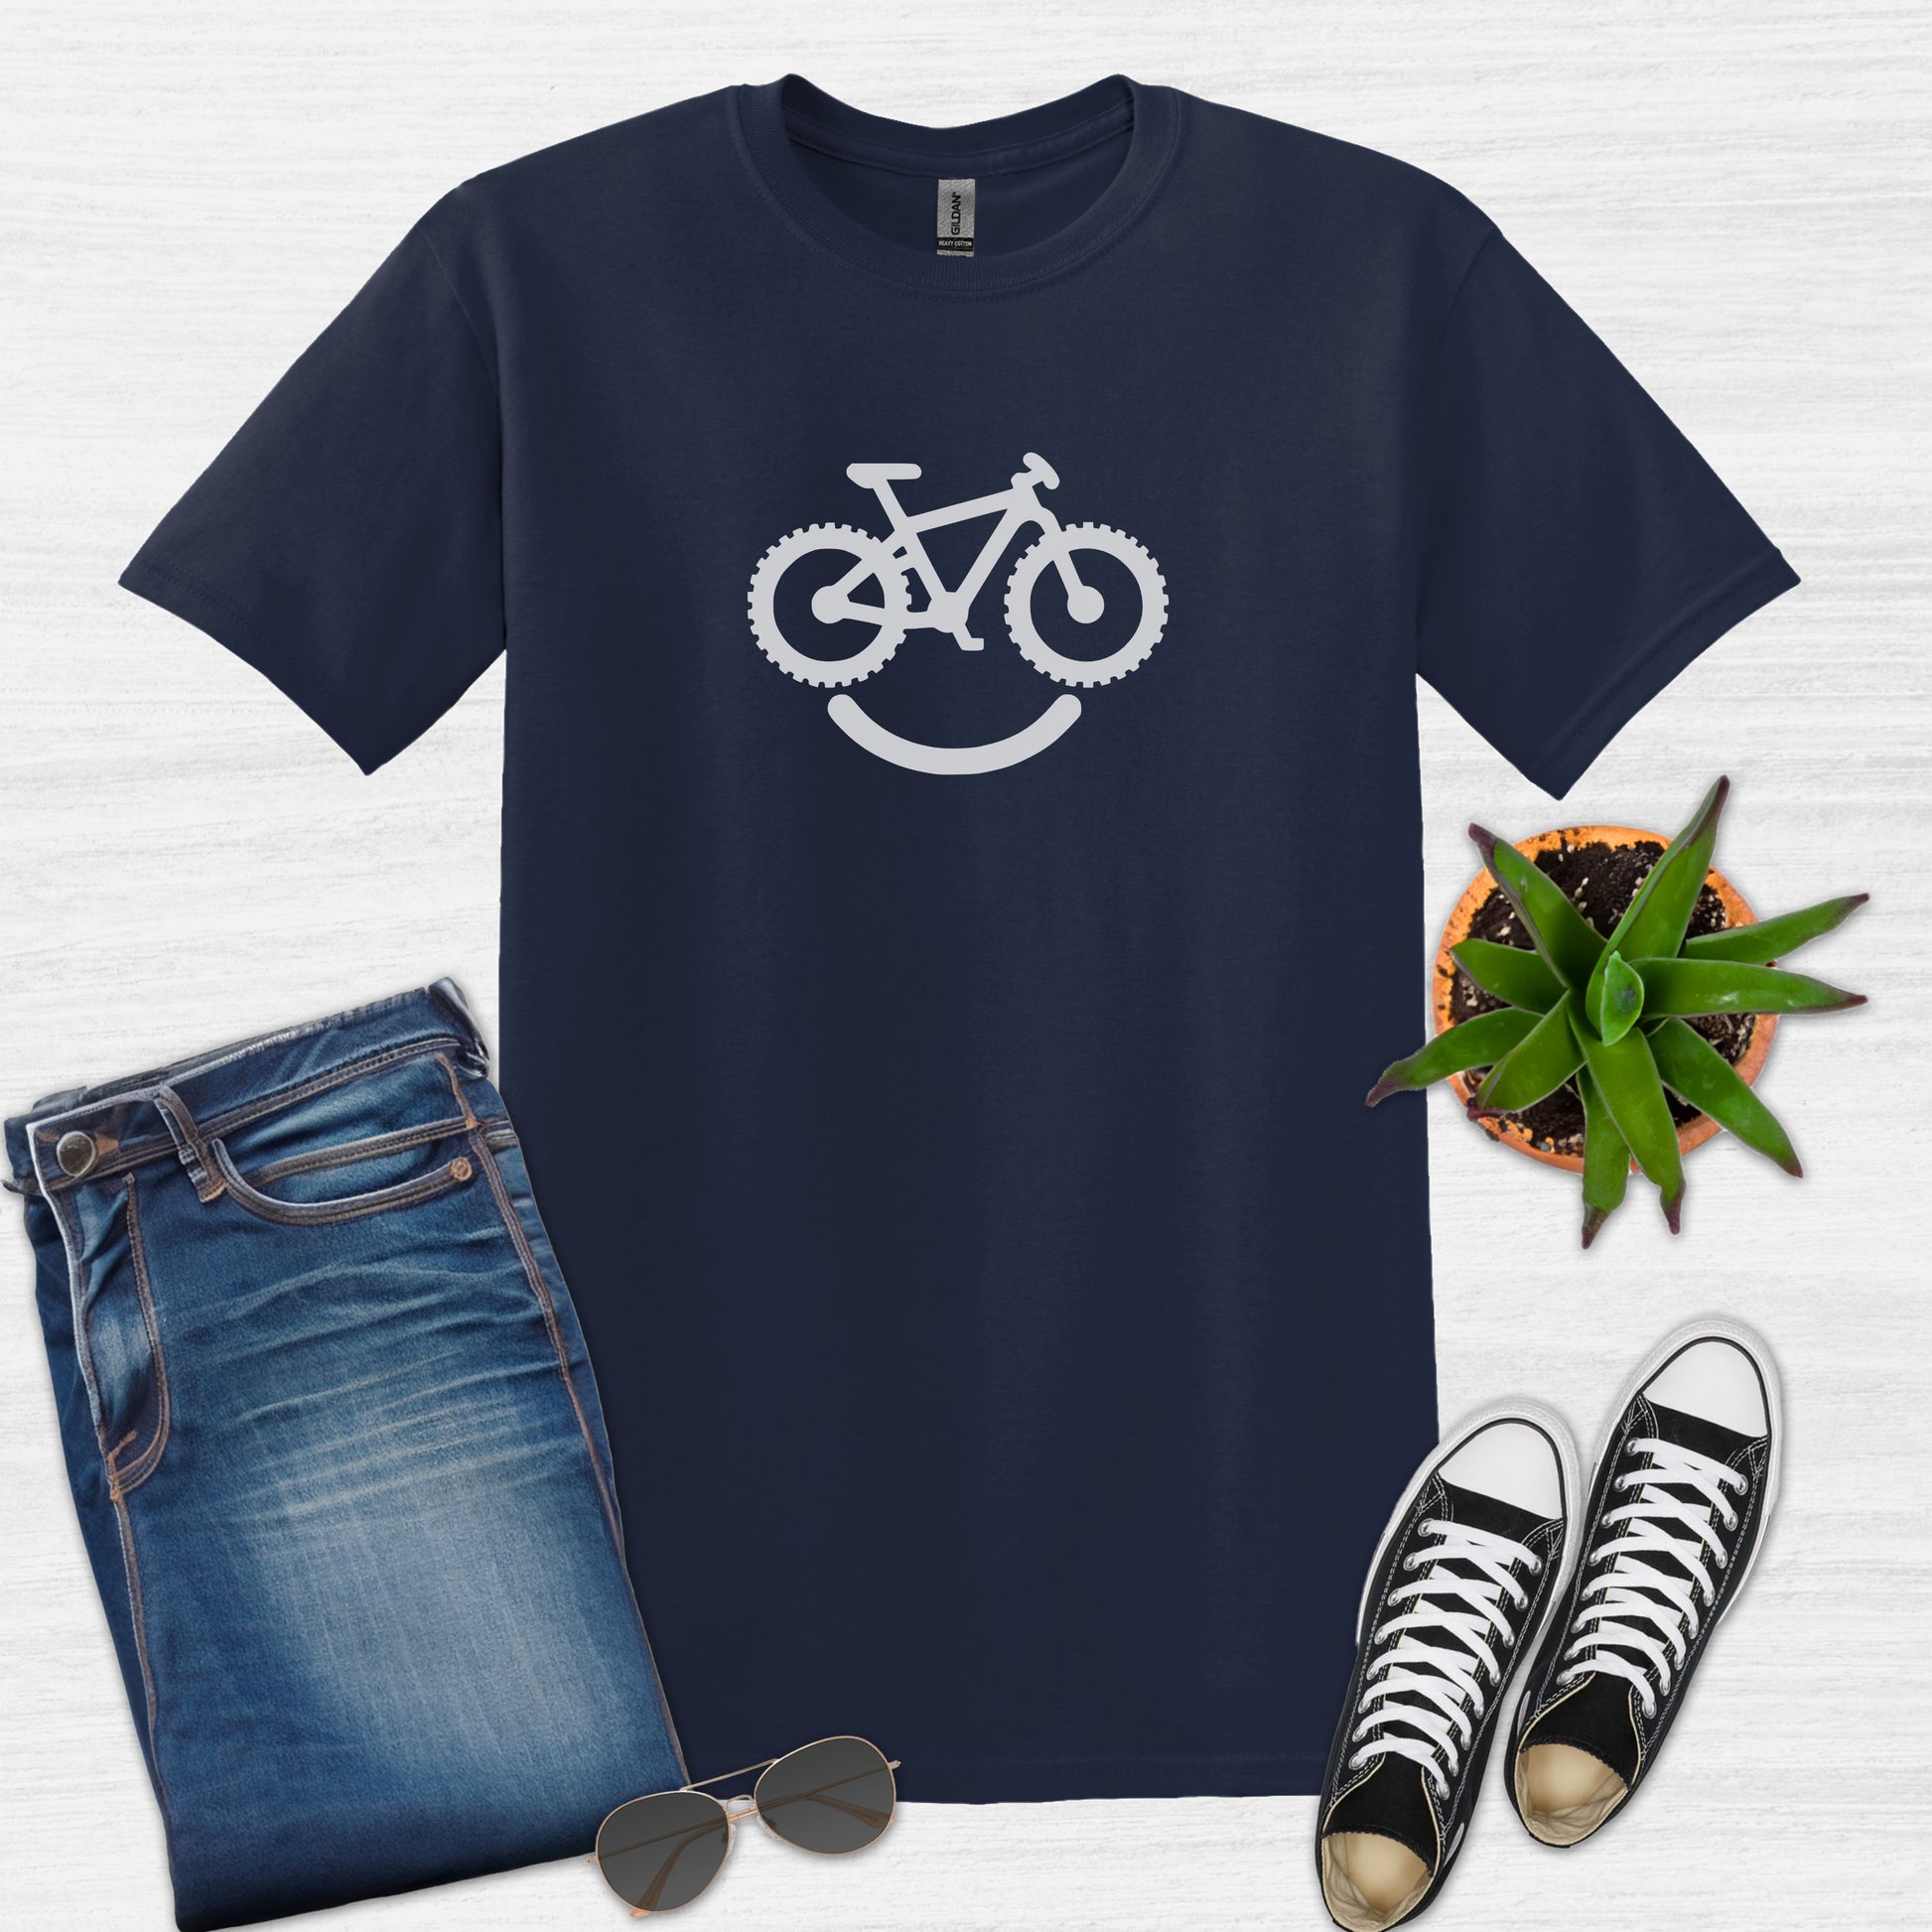 Bike Bliss Happy Mountain Bike T-Shirt for Outdoor Cycling for Men Navy